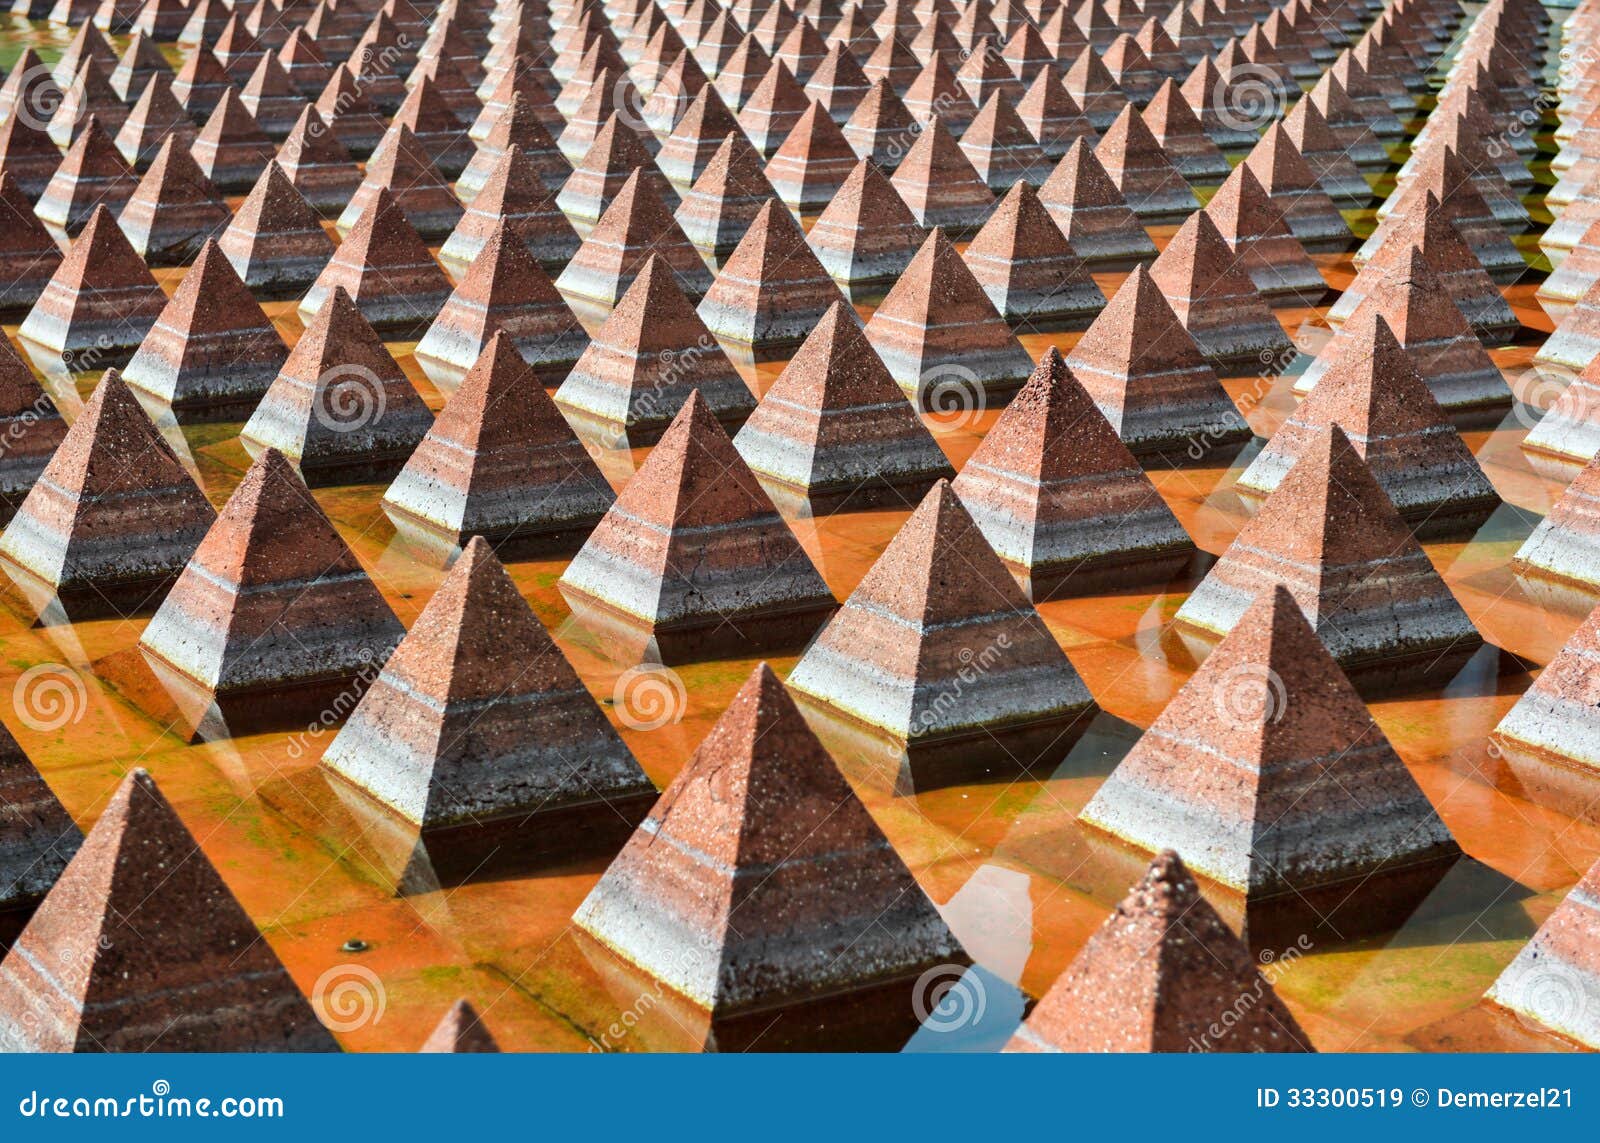 pyramids of plaza juarez